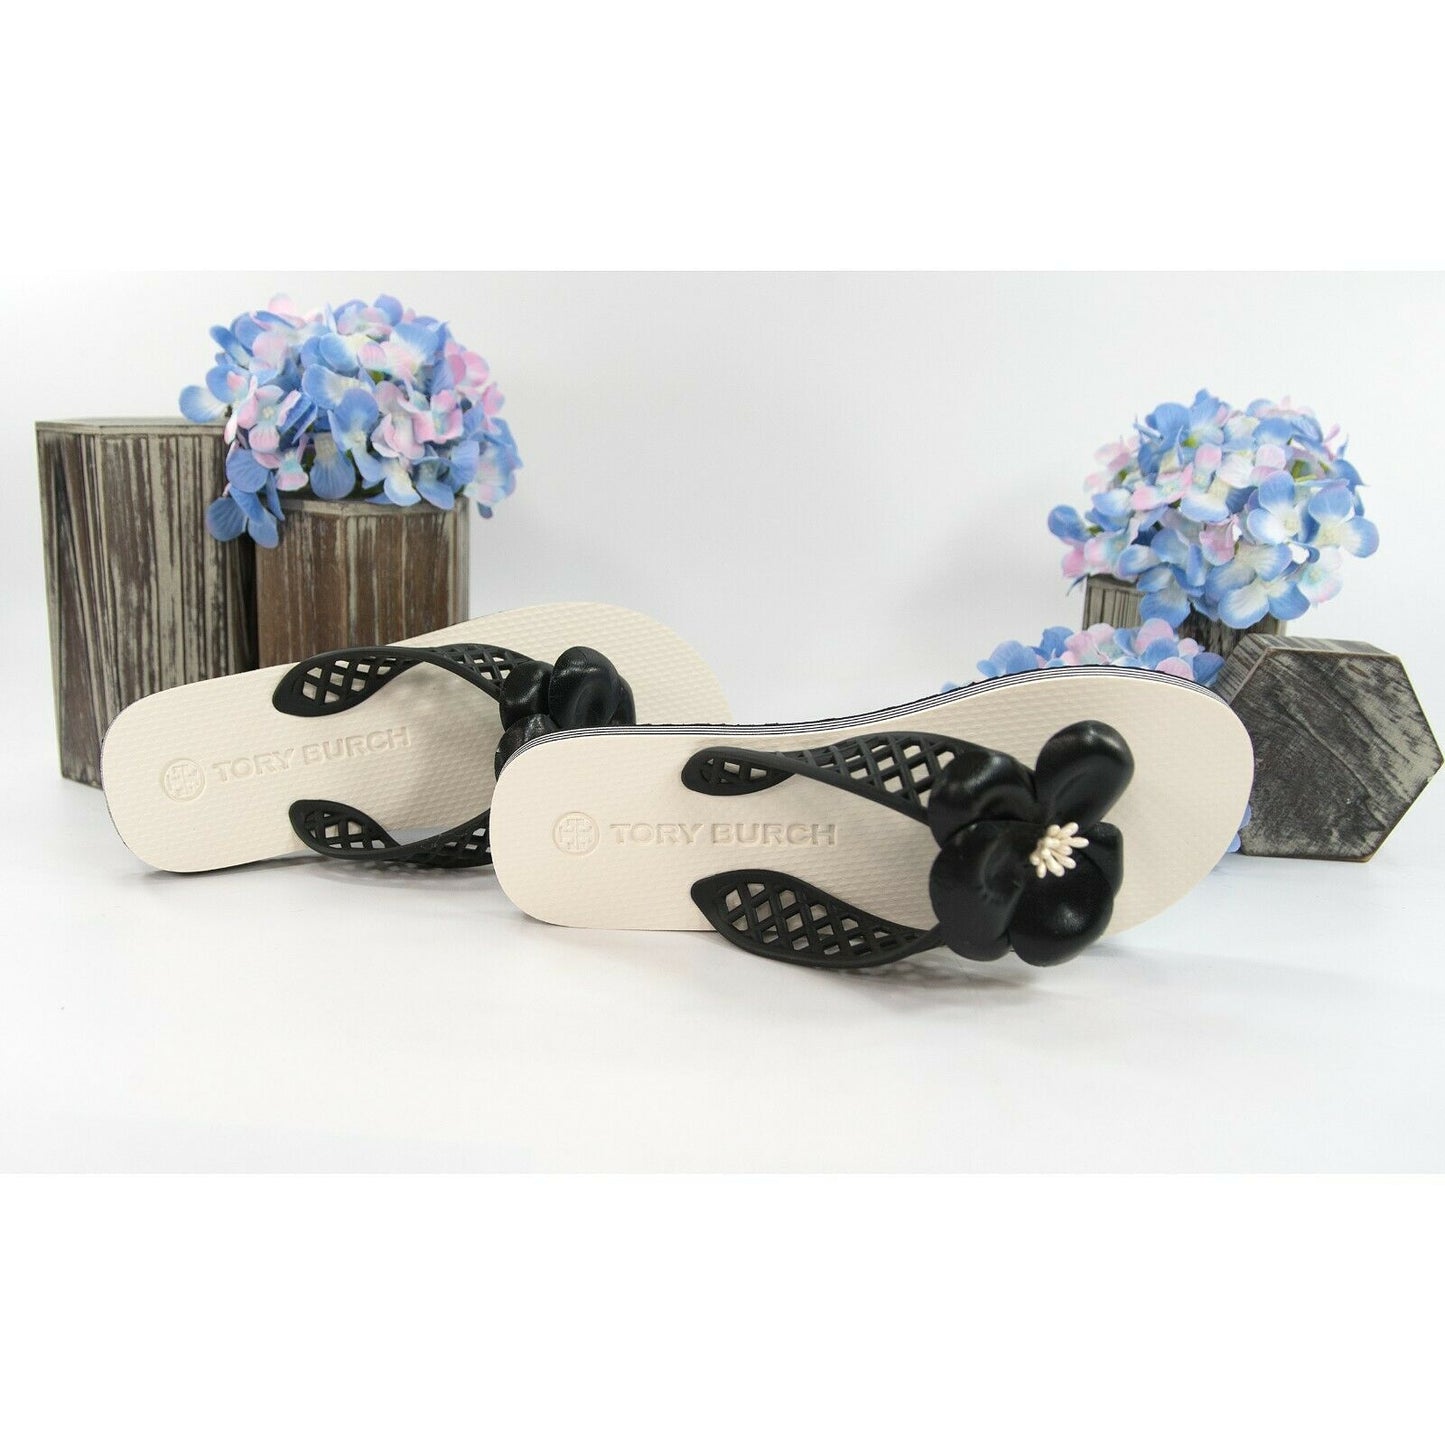 Tory Burch Perfect Black Rubber Leather Petal Flower Slide Sandals Size 7 NIB